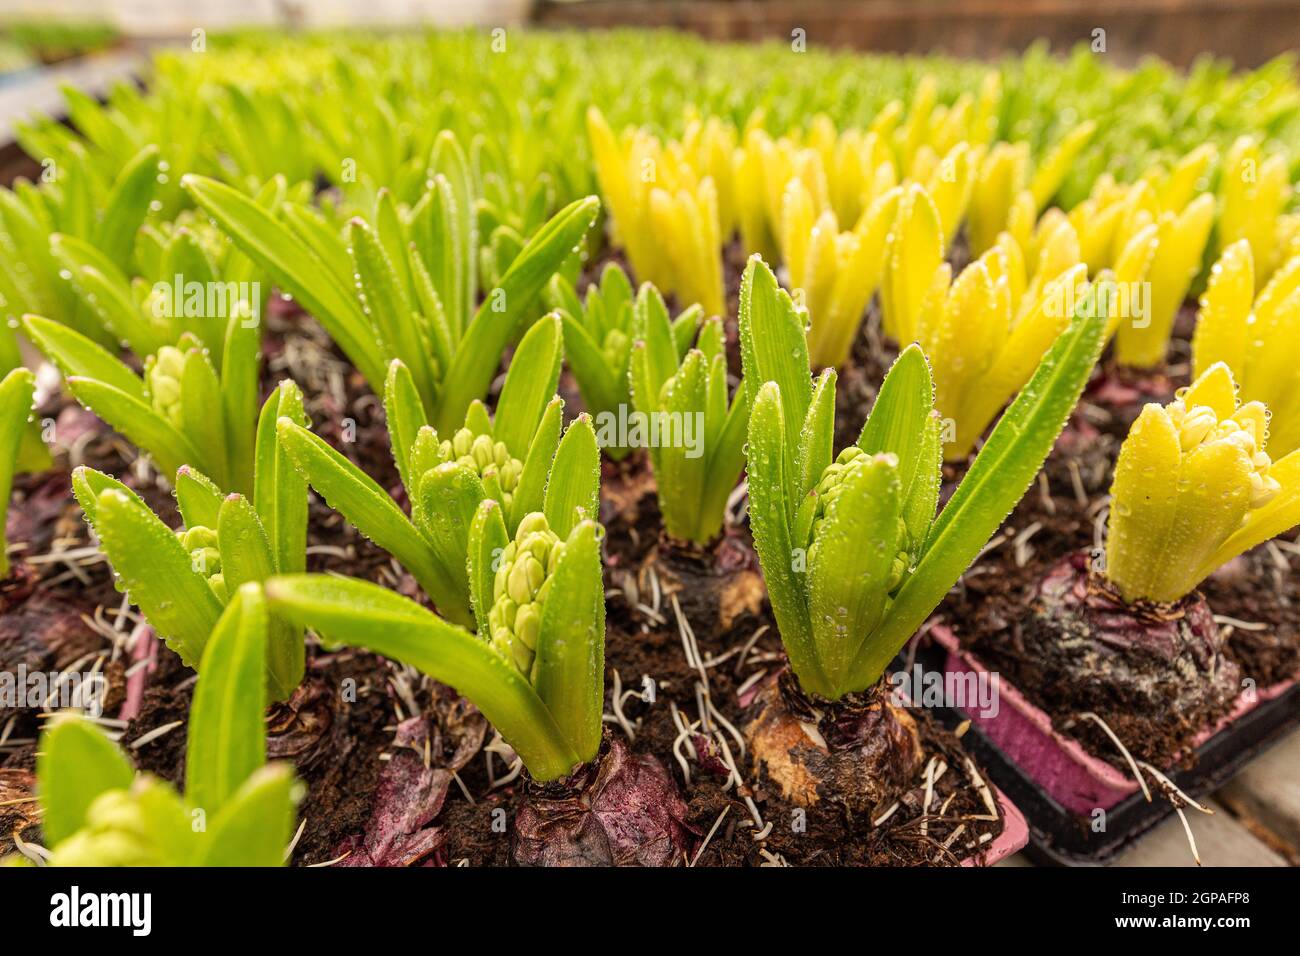 Bulbs of hyacinth flowers in the pots. Bulbs of hyacinth in plant nursery Stock Photo